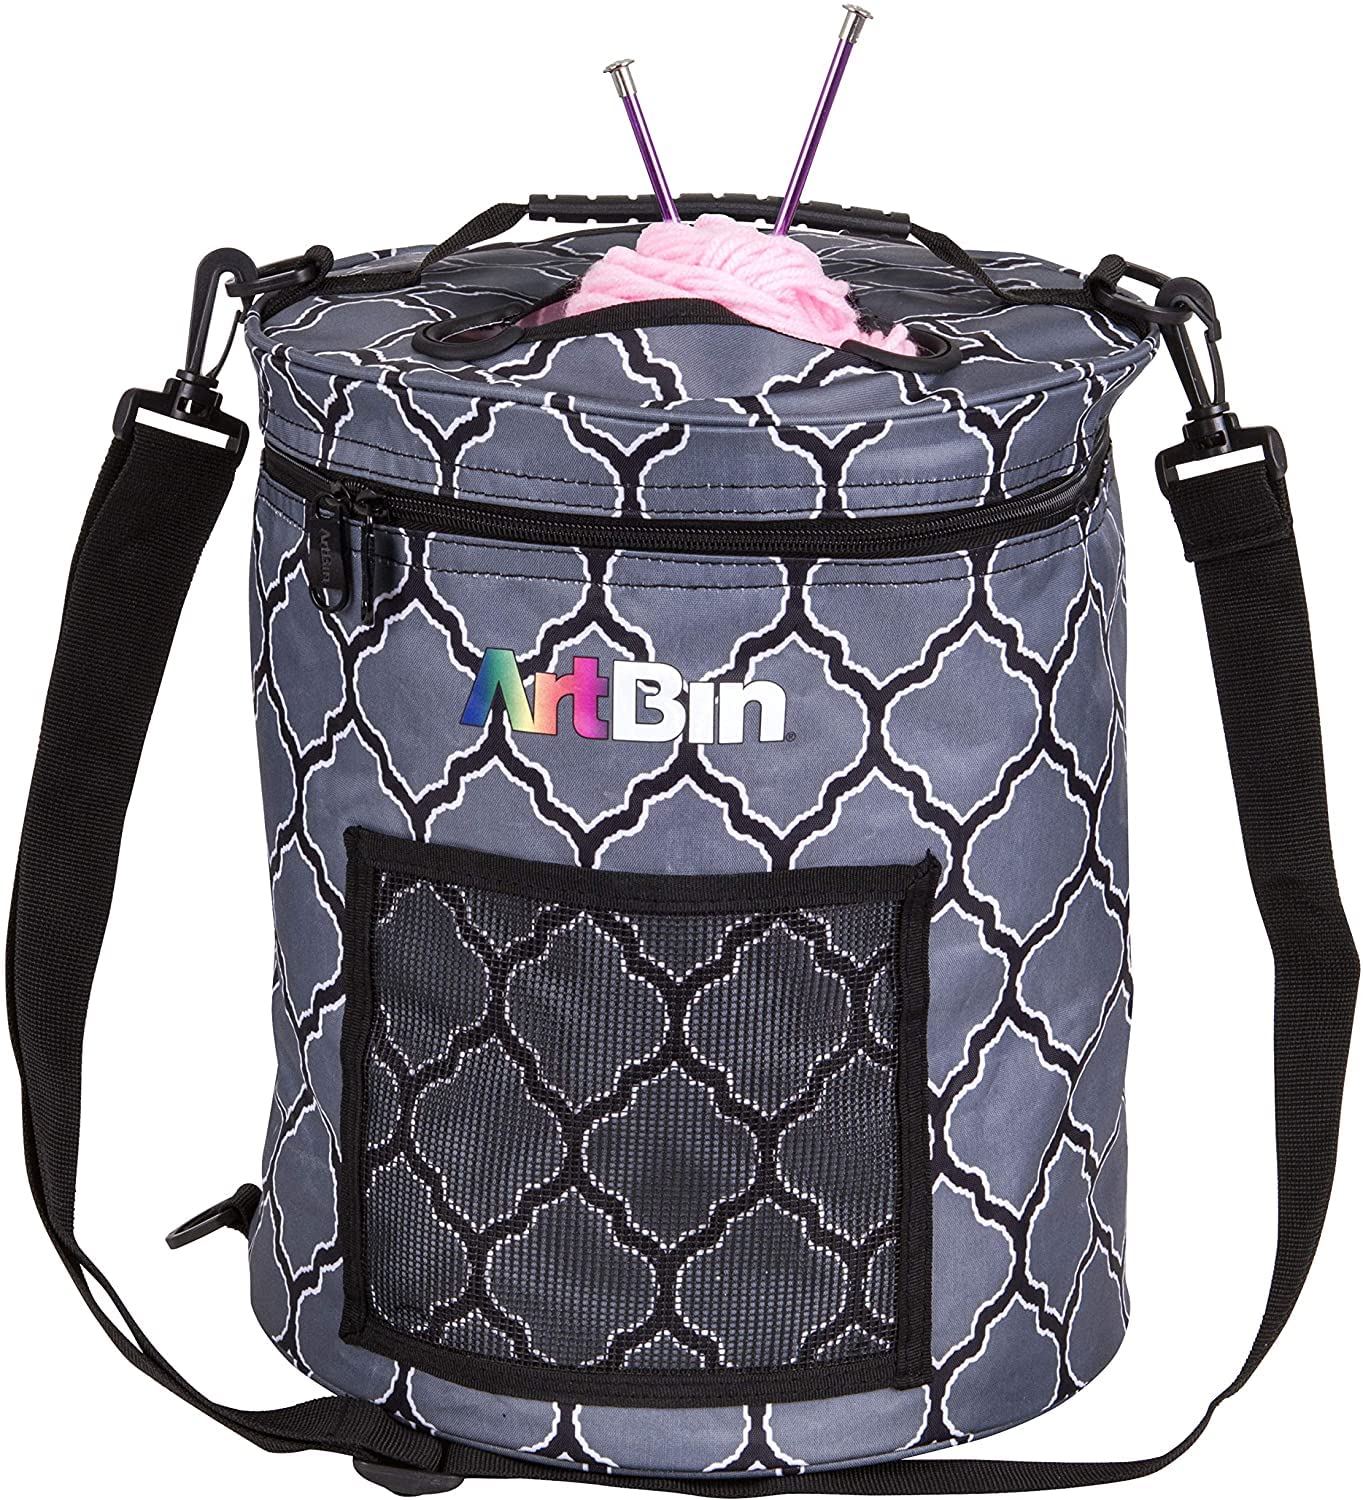 ArtBin 6804SA Yarn Drum, Portable Knitting & Crochet Storage, [1] Poly Canvas Tote Bag, Gray Print